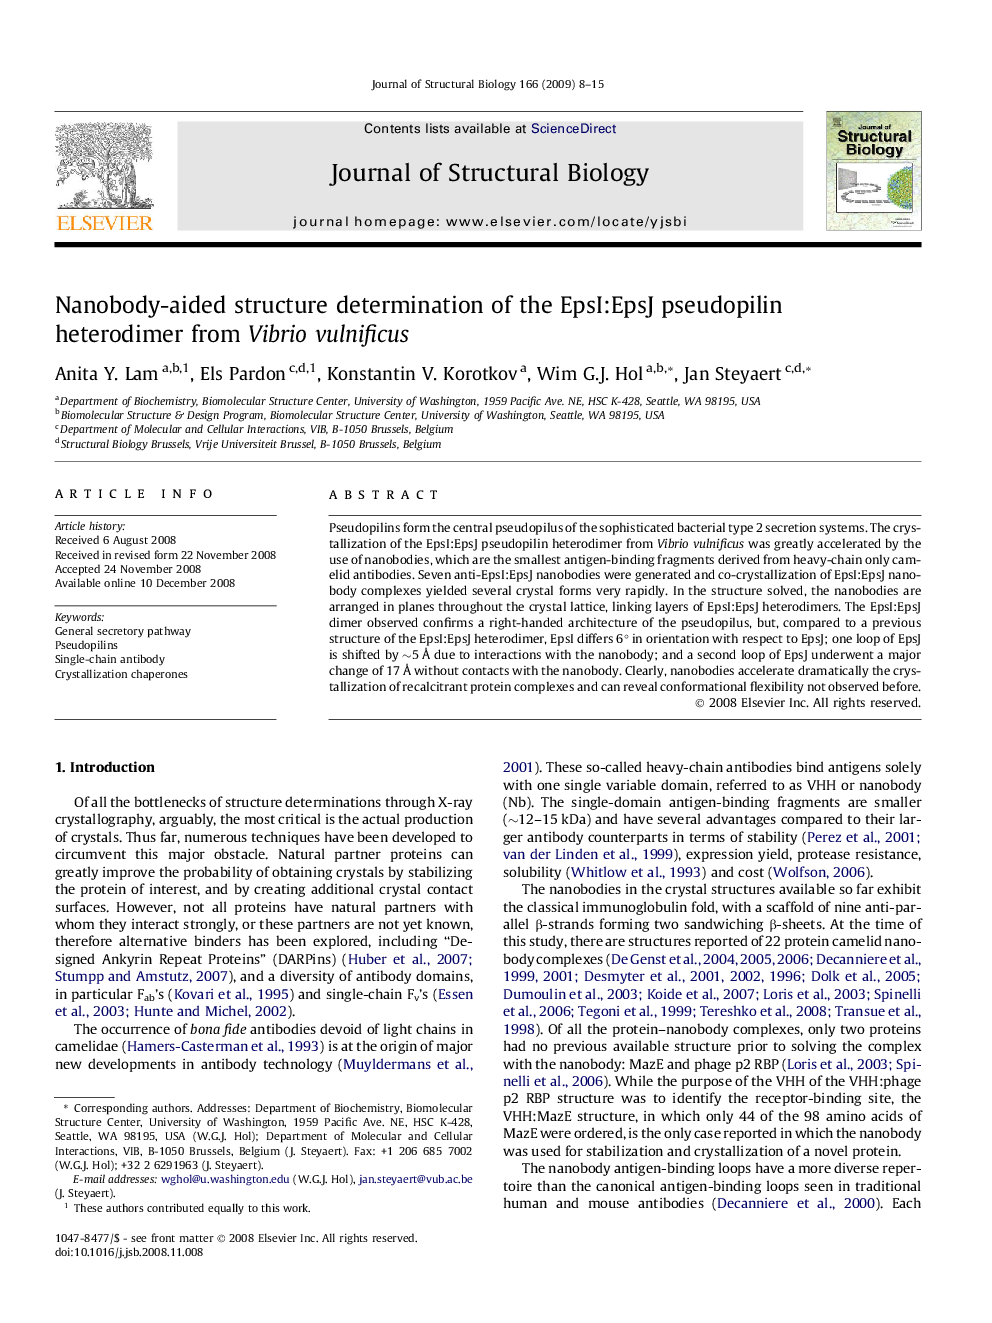 Nanobody-aided structure determination of the EpsI:EpsJ pseudopilin heterodimer from Vibrio vulnificus